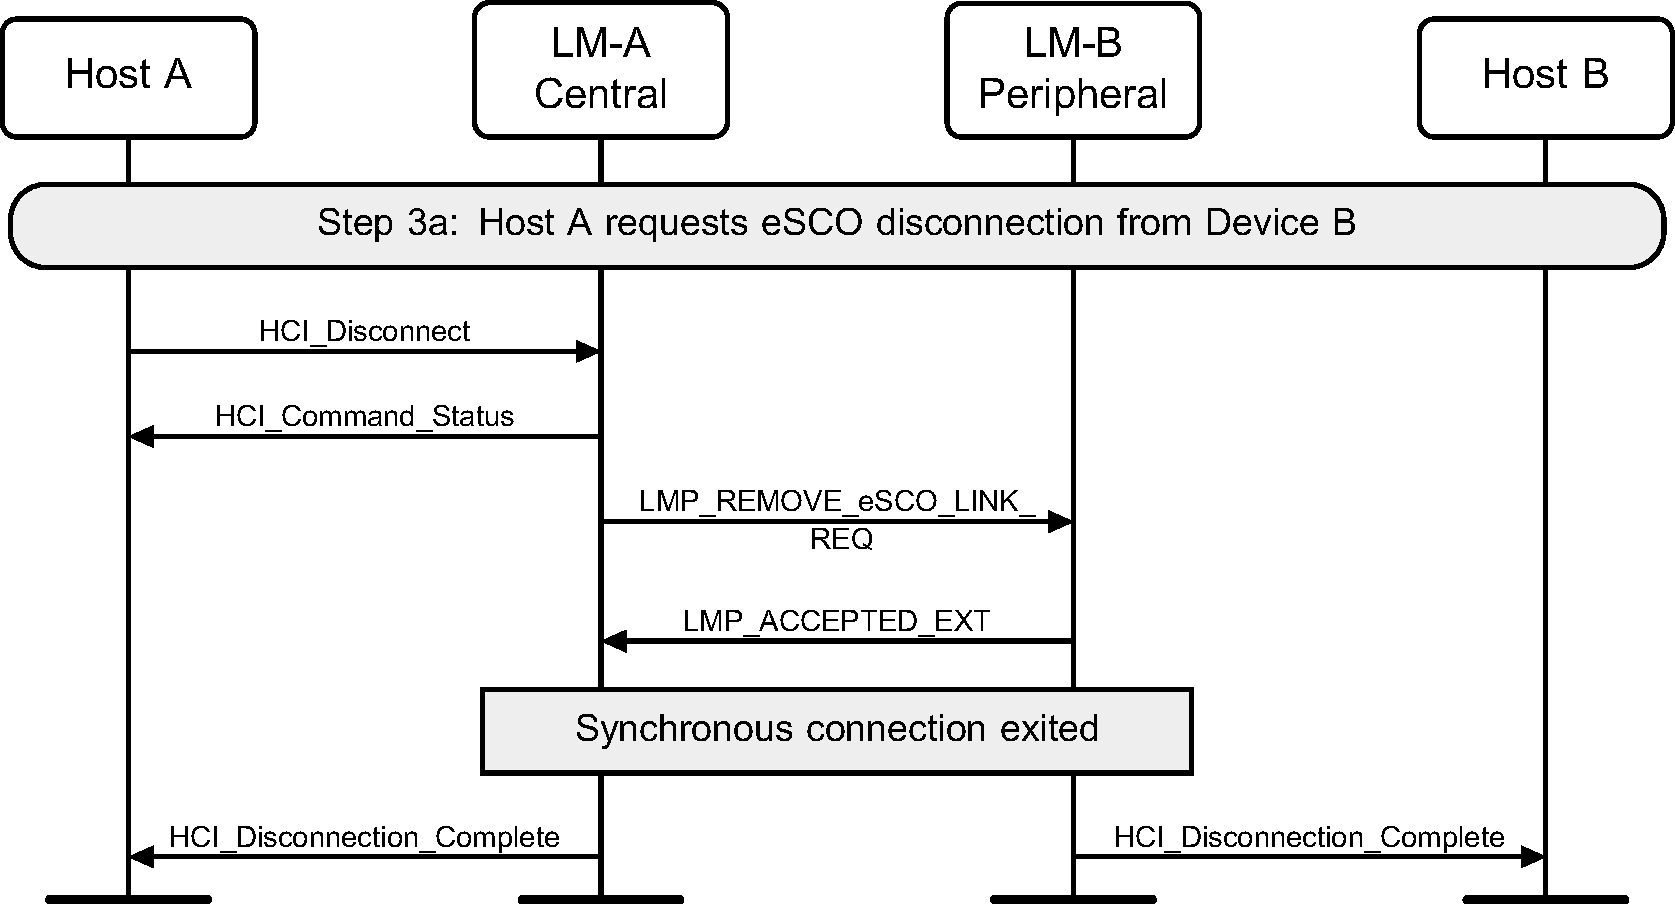 Synchronous disconnection of eSCO connection